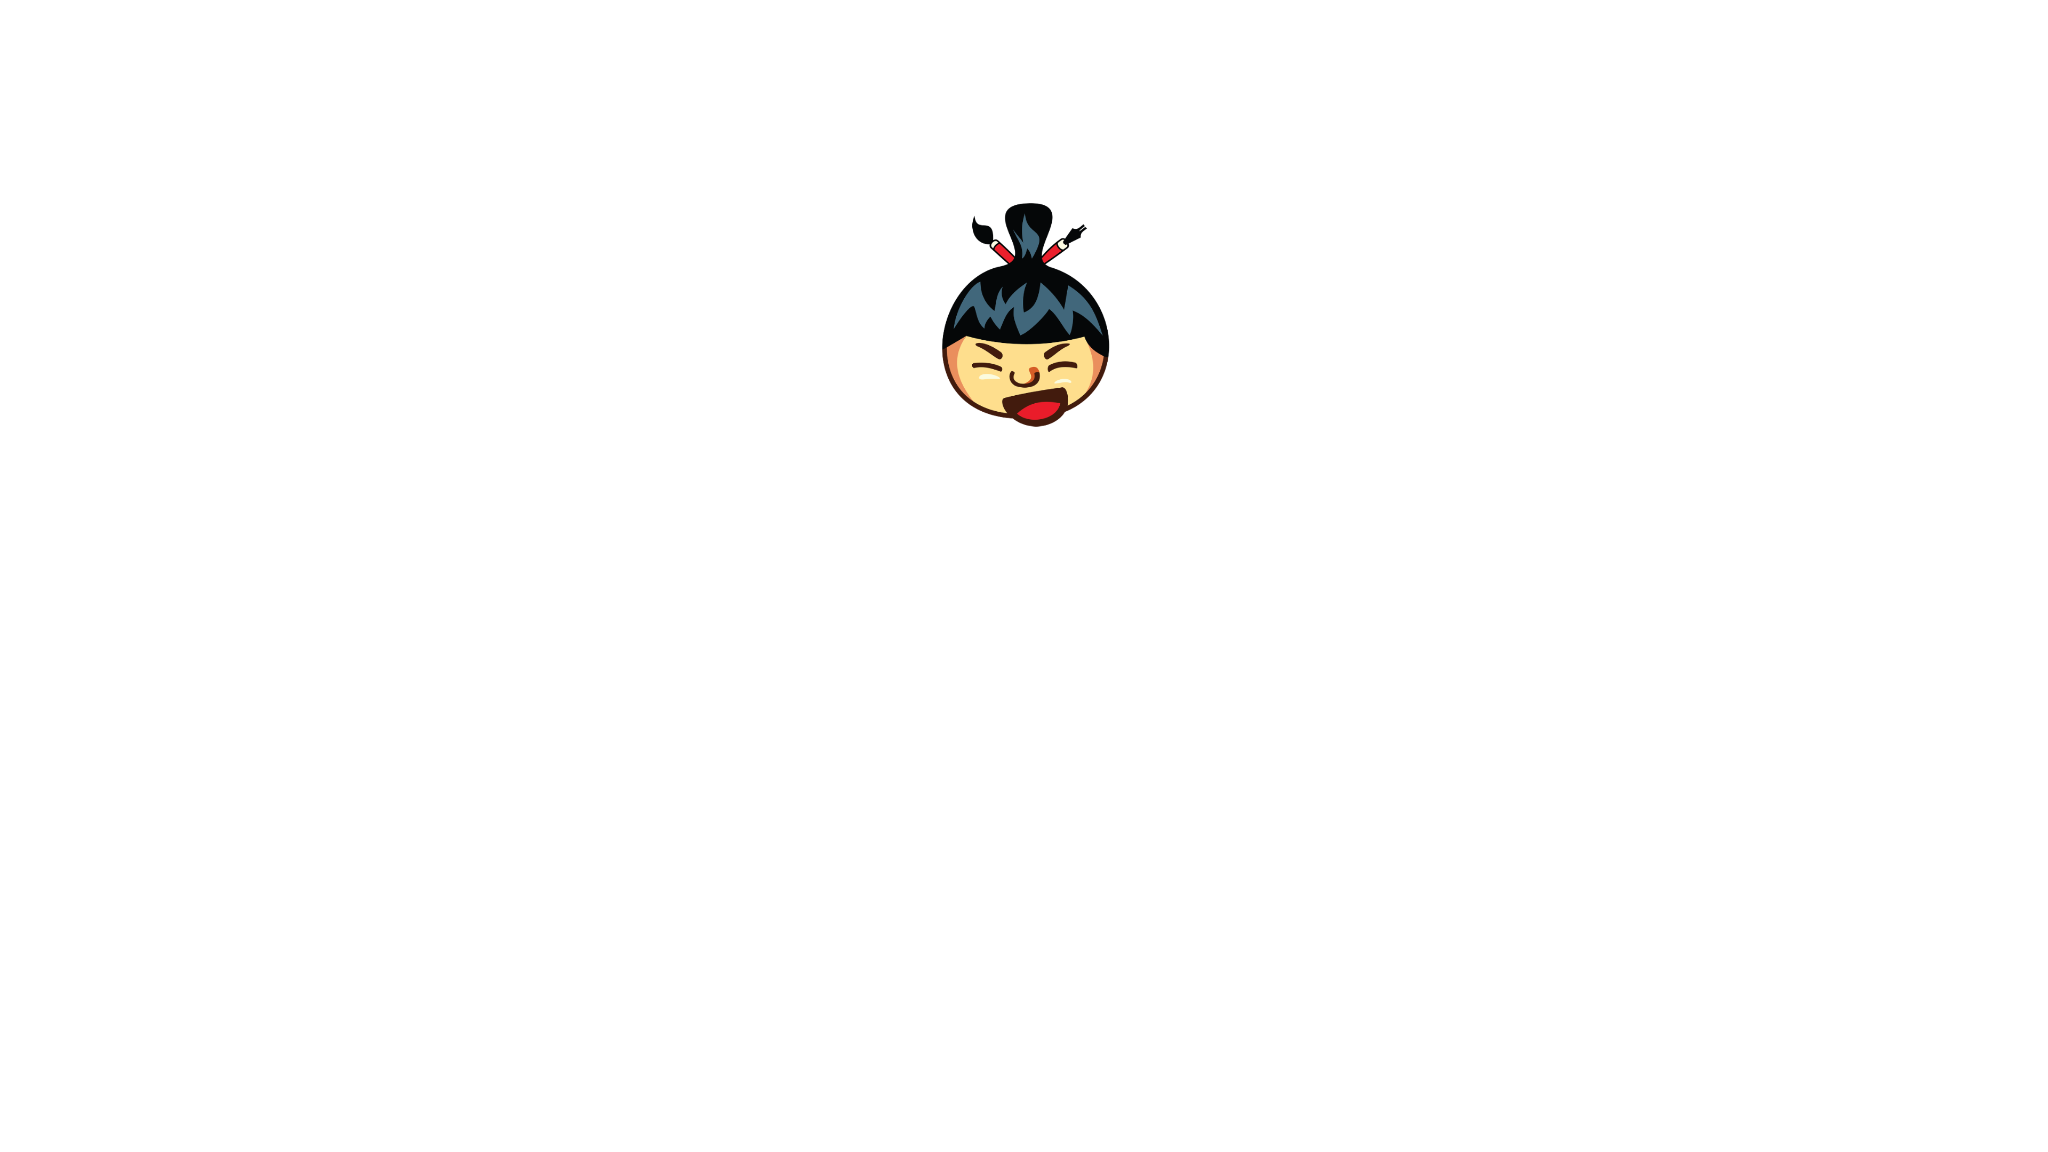 Sumo Video Intro - dibuat oleh Lauri Koutaniemi dengan paint